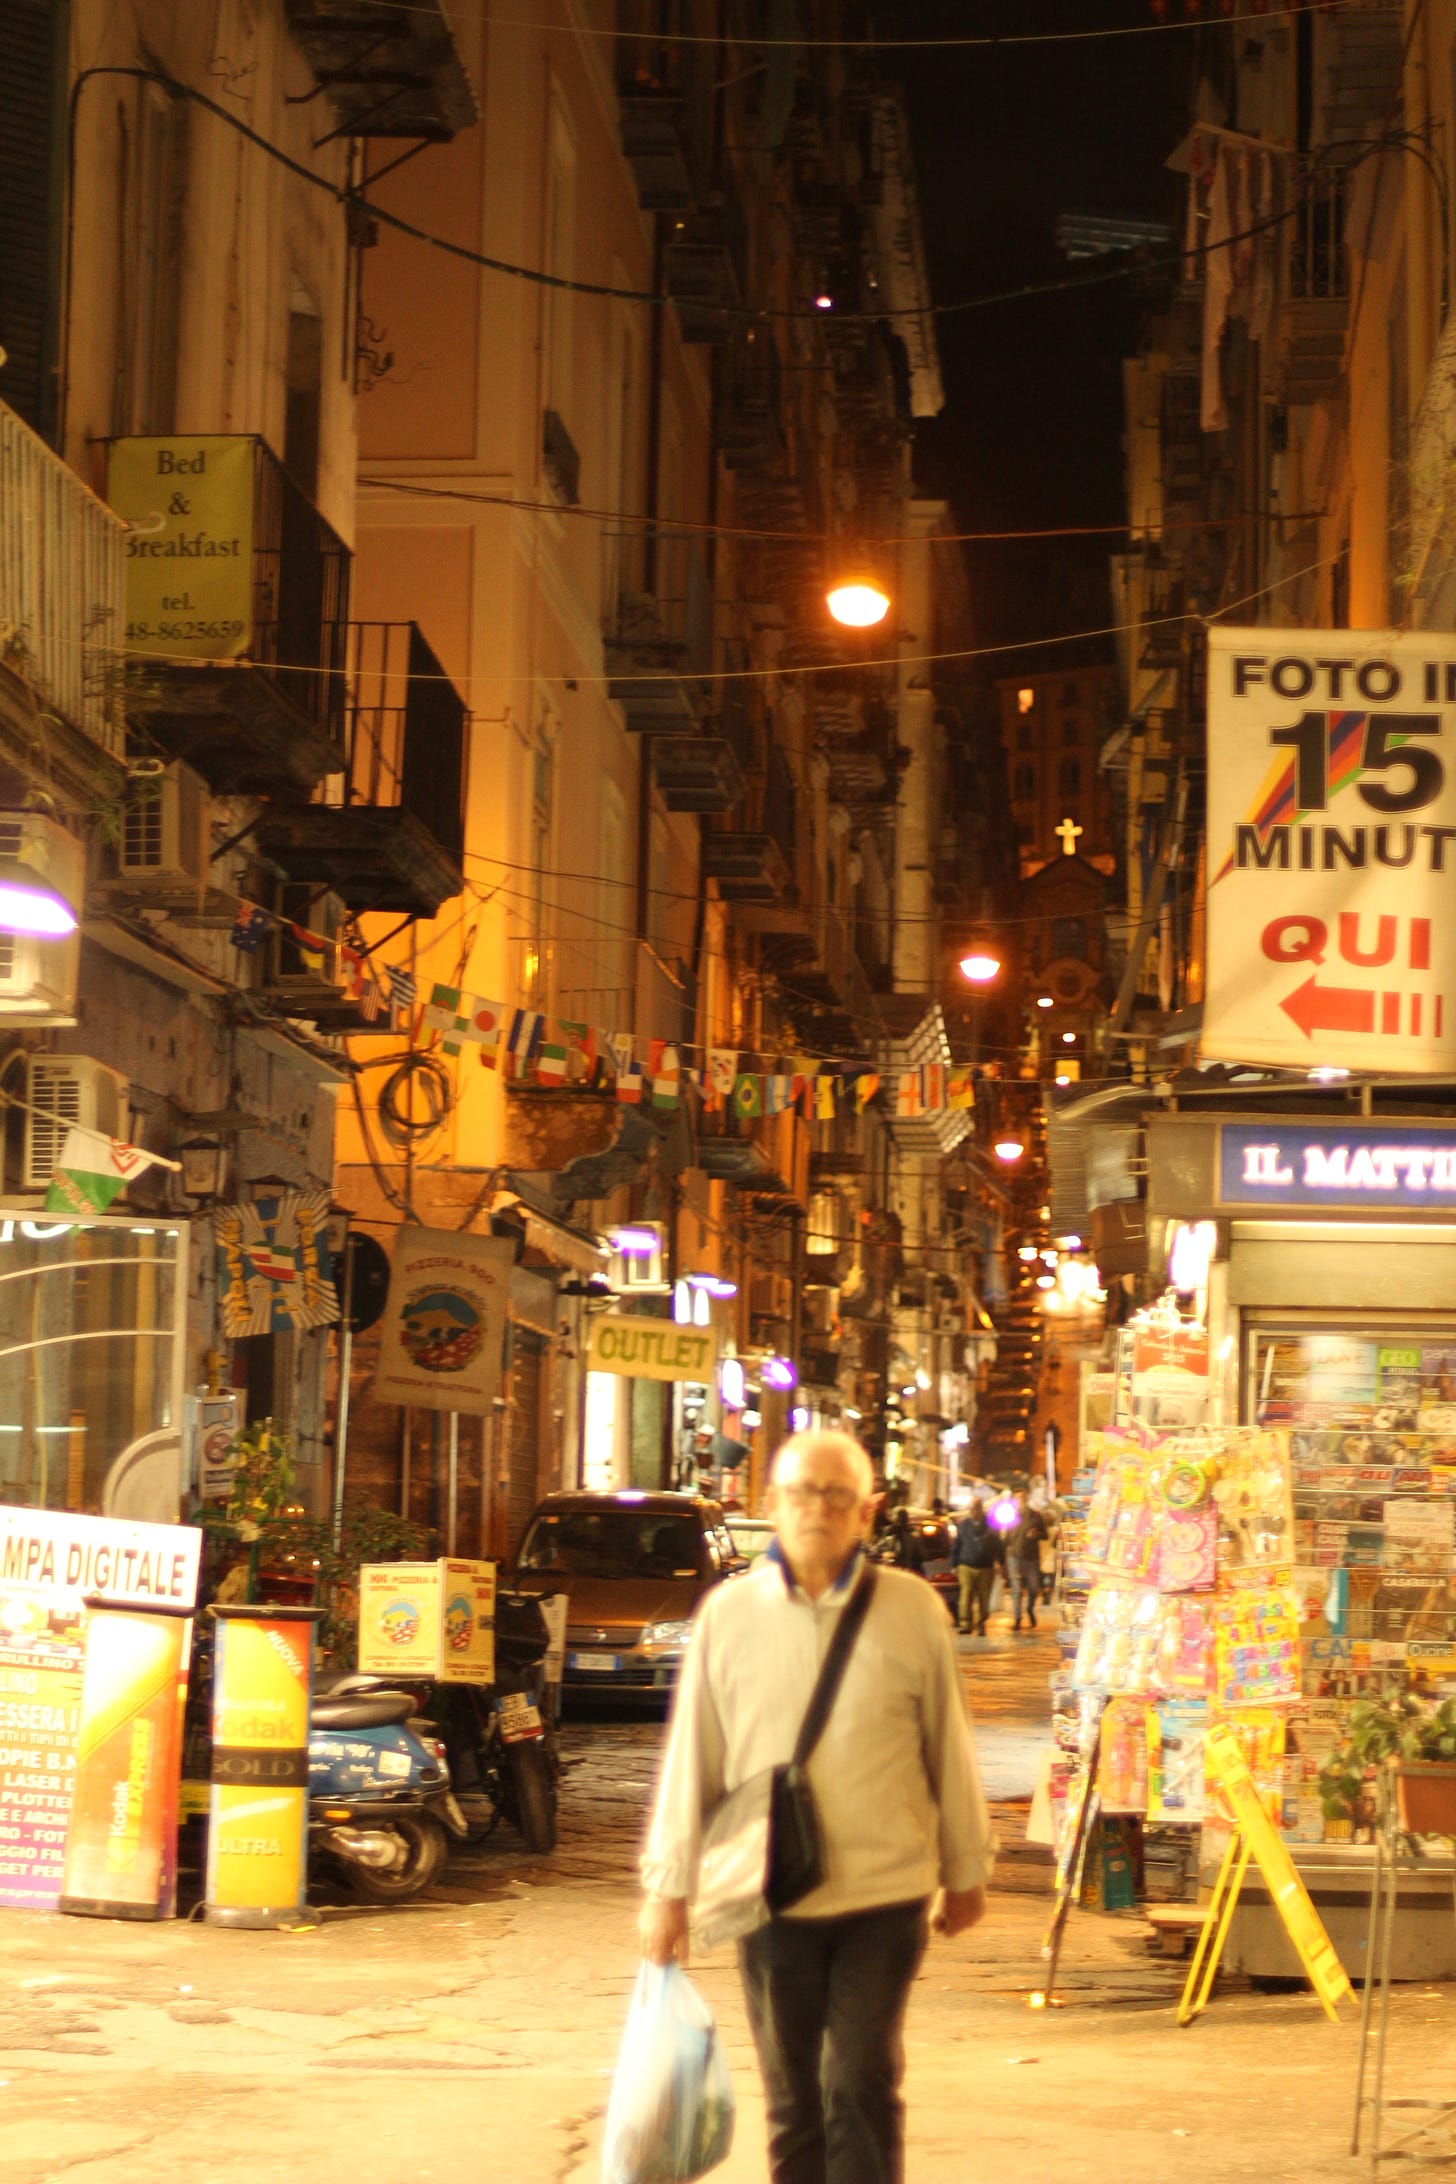 A nighttime street scene in Naples